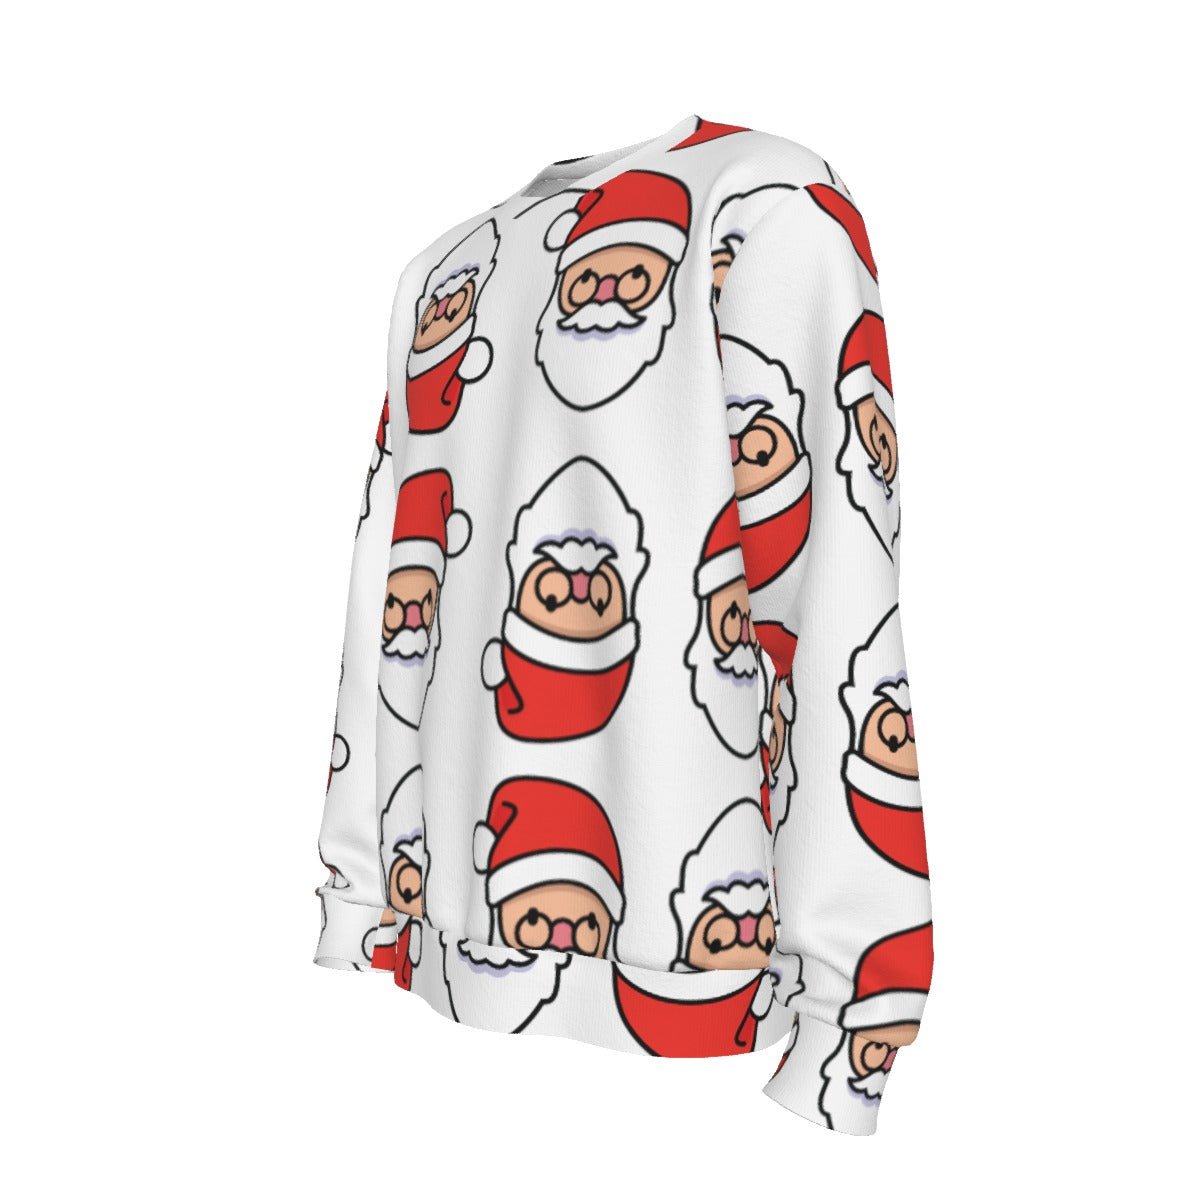 Men's Christmas Sweater - Mirrored Santa - Festive Style